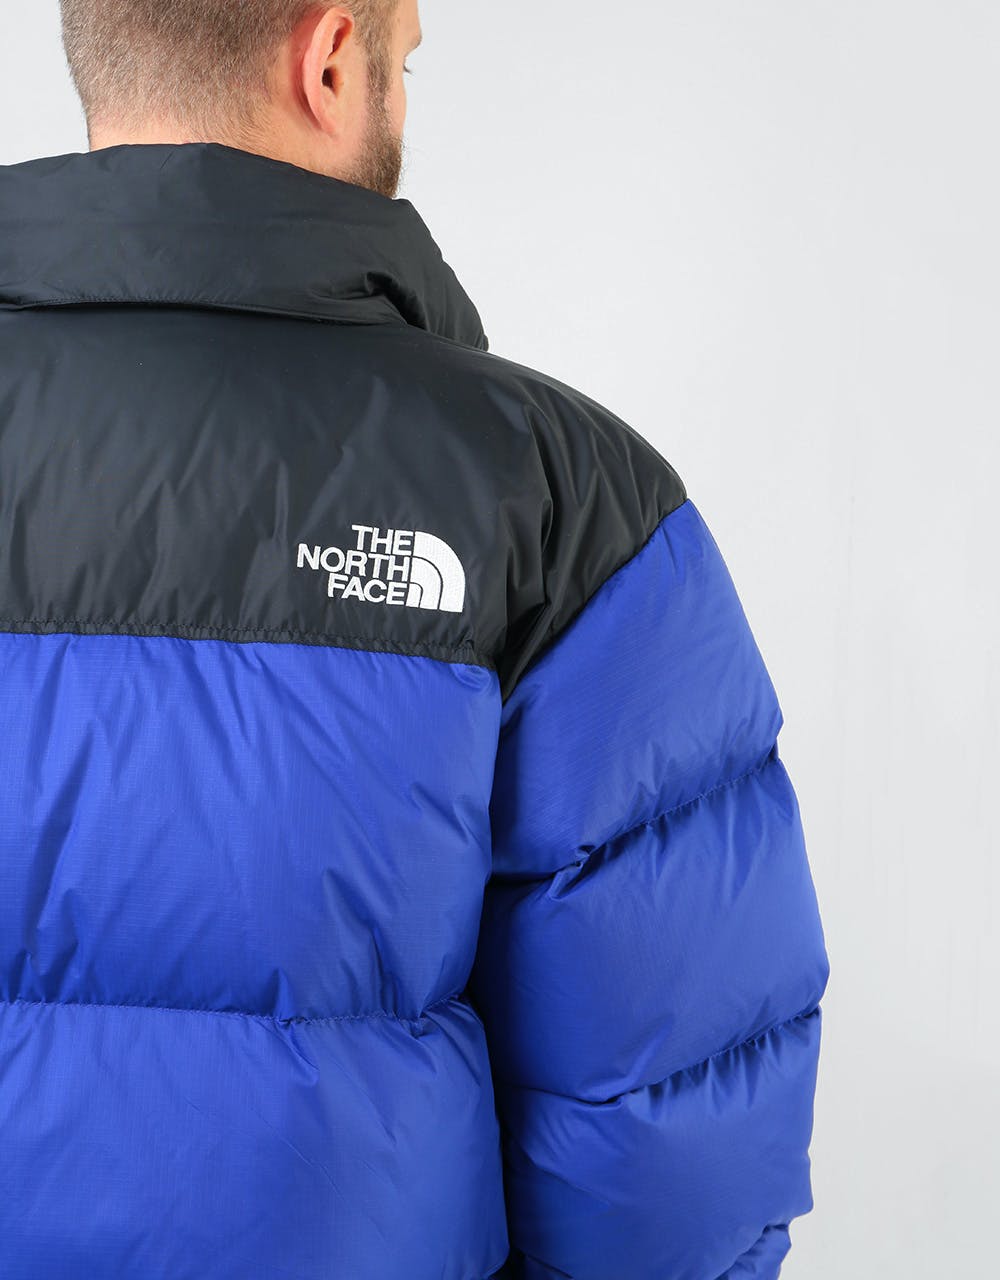 The North Face 1996 Retro Nuptse Jacket - Aztec Blue